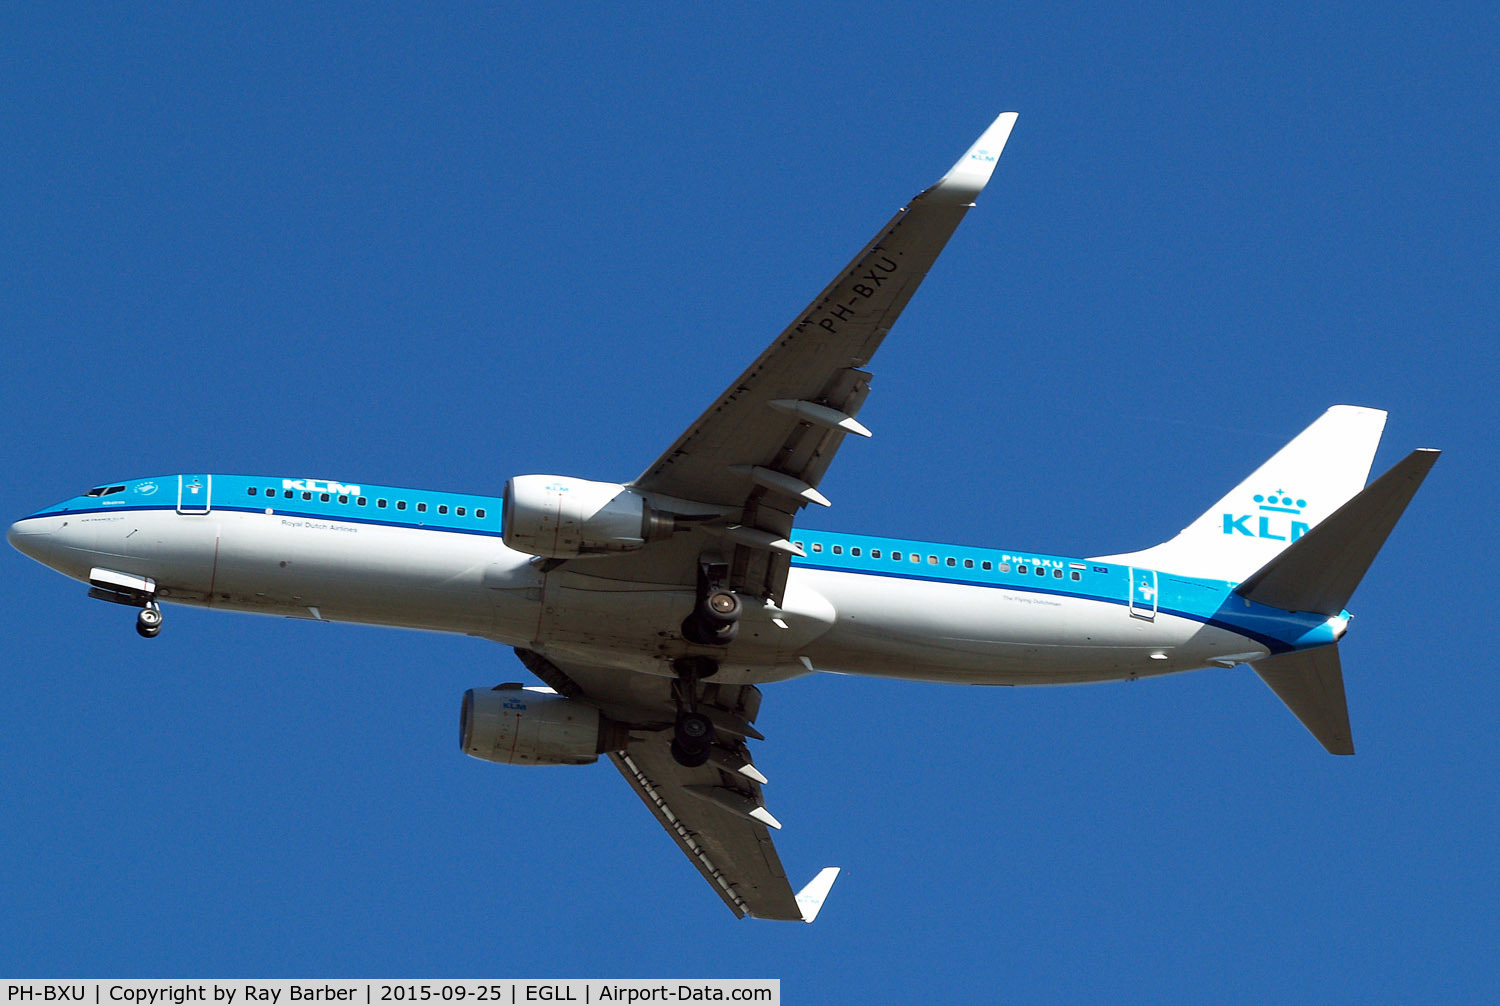 PH-BXU, 2006 Boeing 737-8BK C/N 33028, Boeing 737-8BK [33028] KLM (Royal Dutch Airlines) Home~G 25/09/2015. On approach 27R.